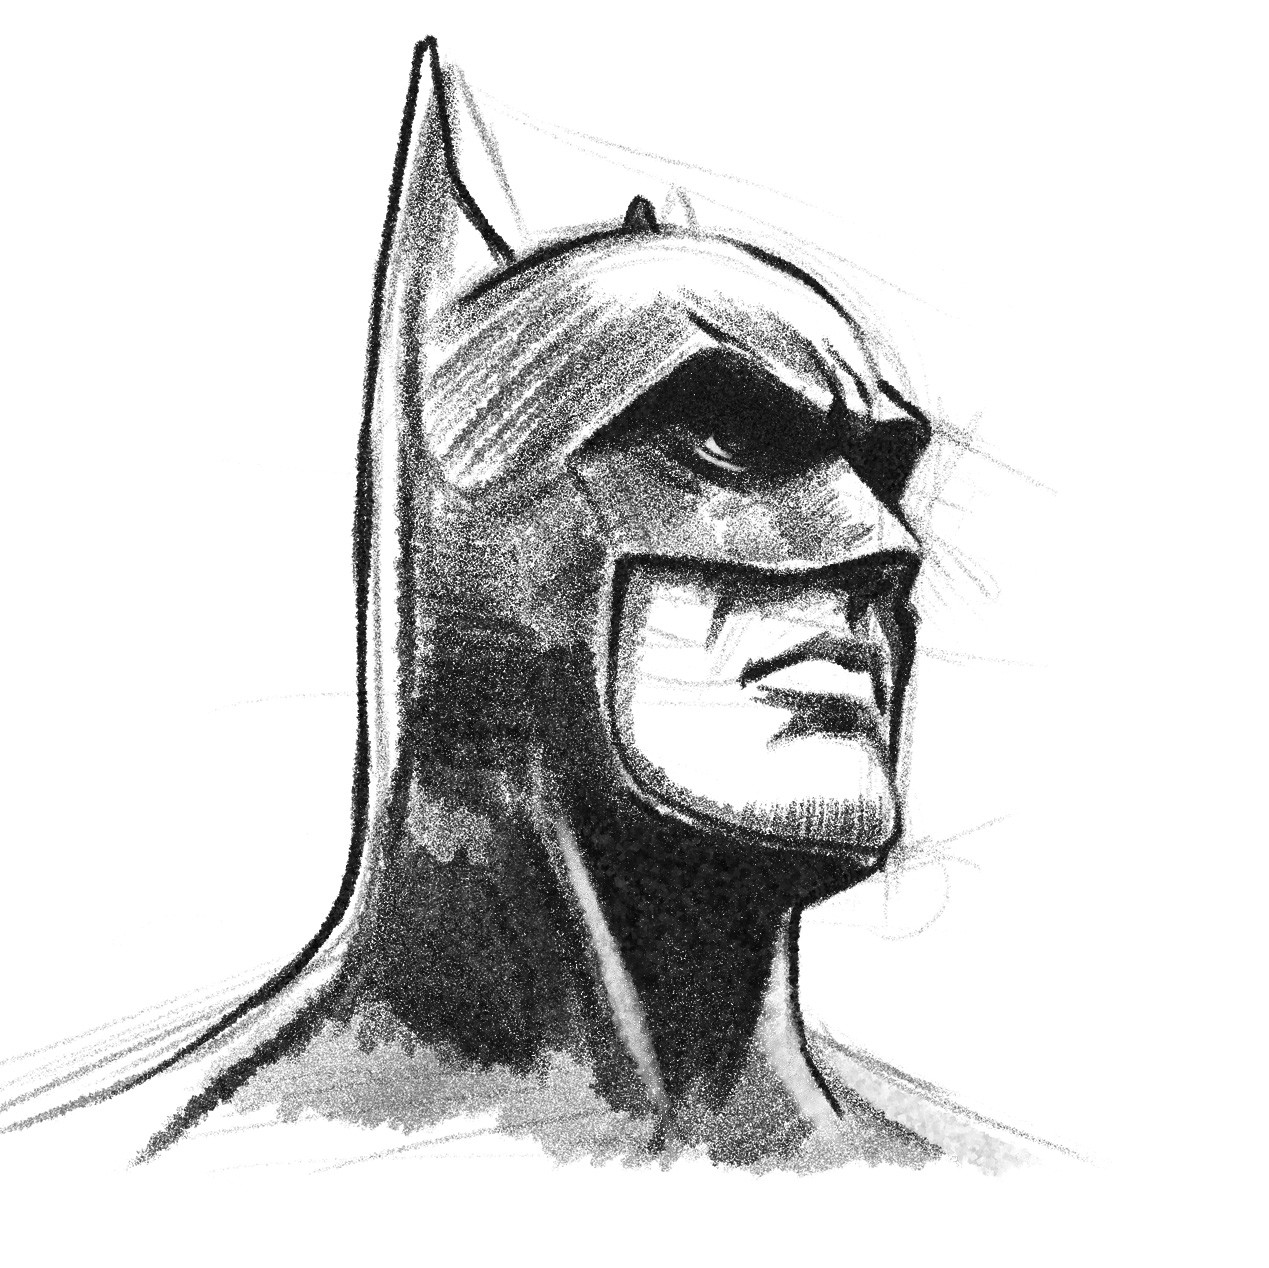 Crist Oeuf - Batman | Drawing